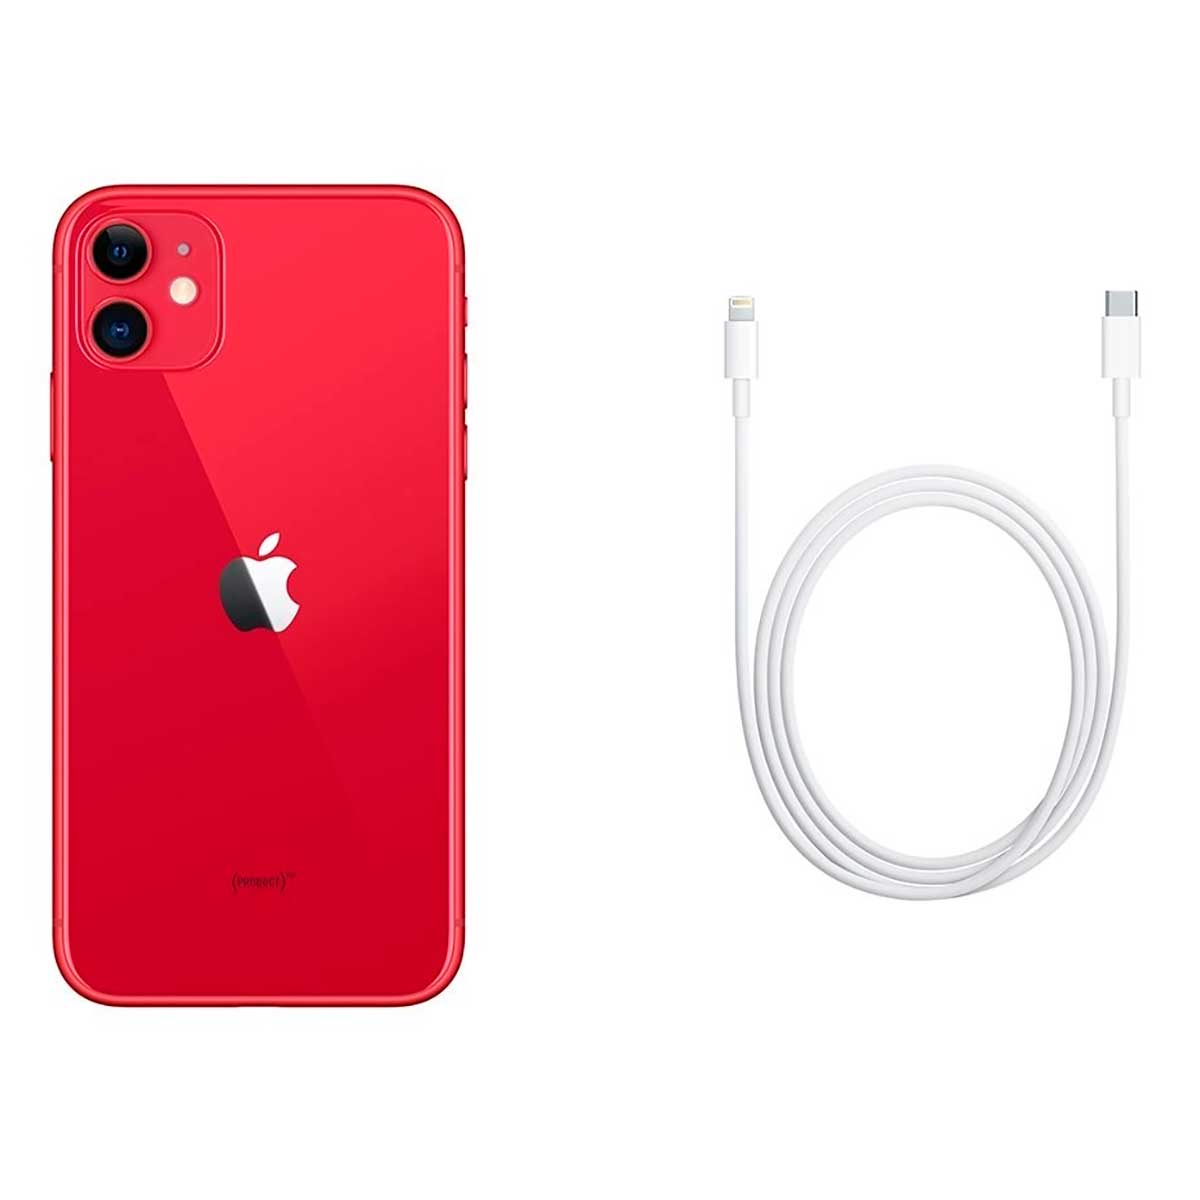 smartphone-apple-iphone-11-64gb-vermelho-4g-6.1--liquid-retina-hd-camera-dupla-12mp-selfie-12mp-ios-15-4.jpg